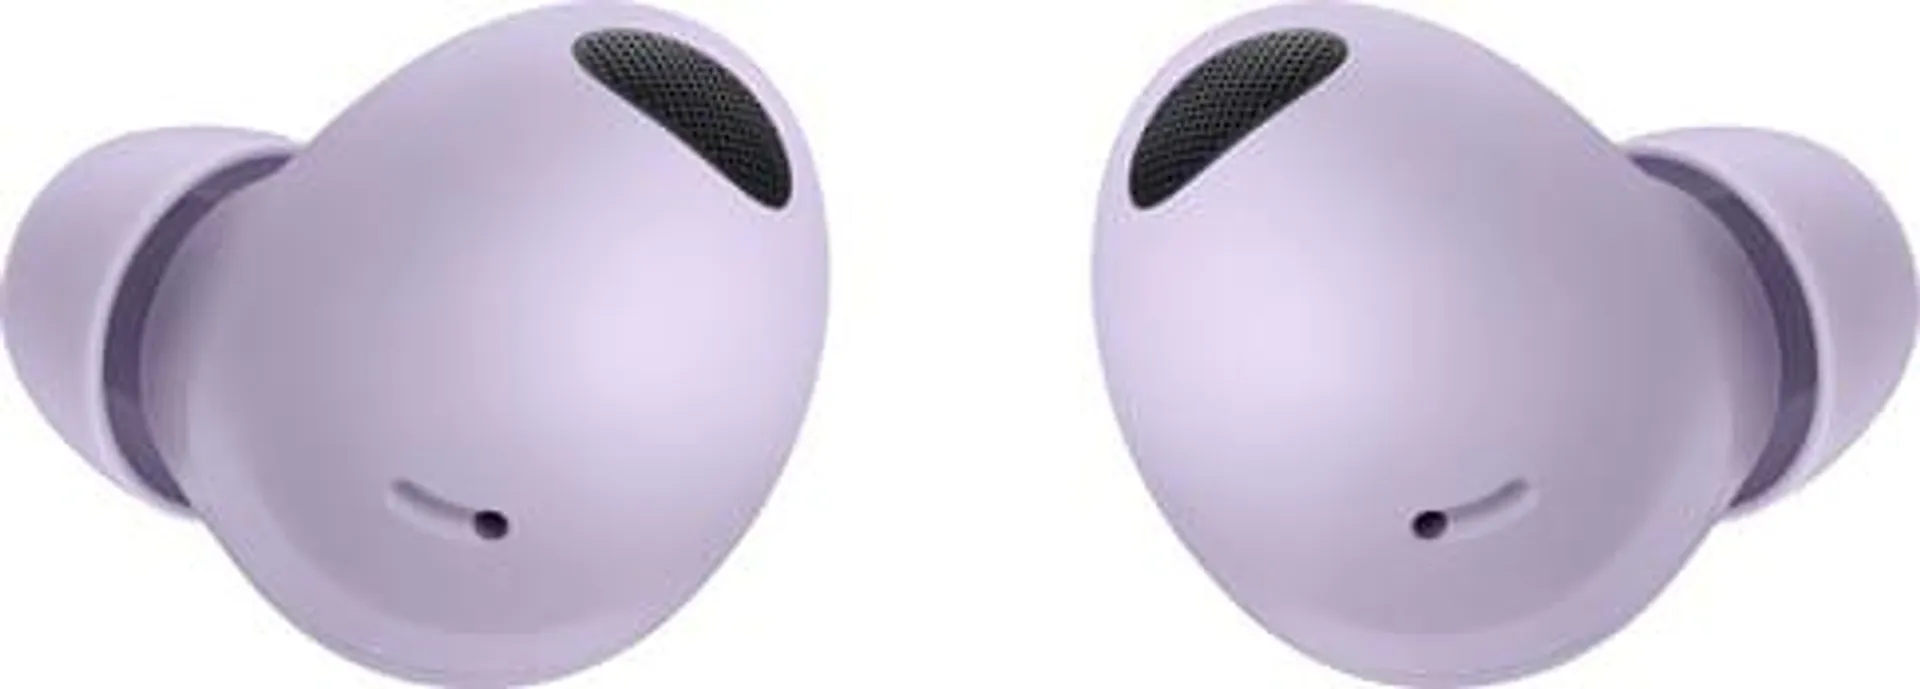 Galaxy Buds2 Pro Bluetooth Kopfhörer